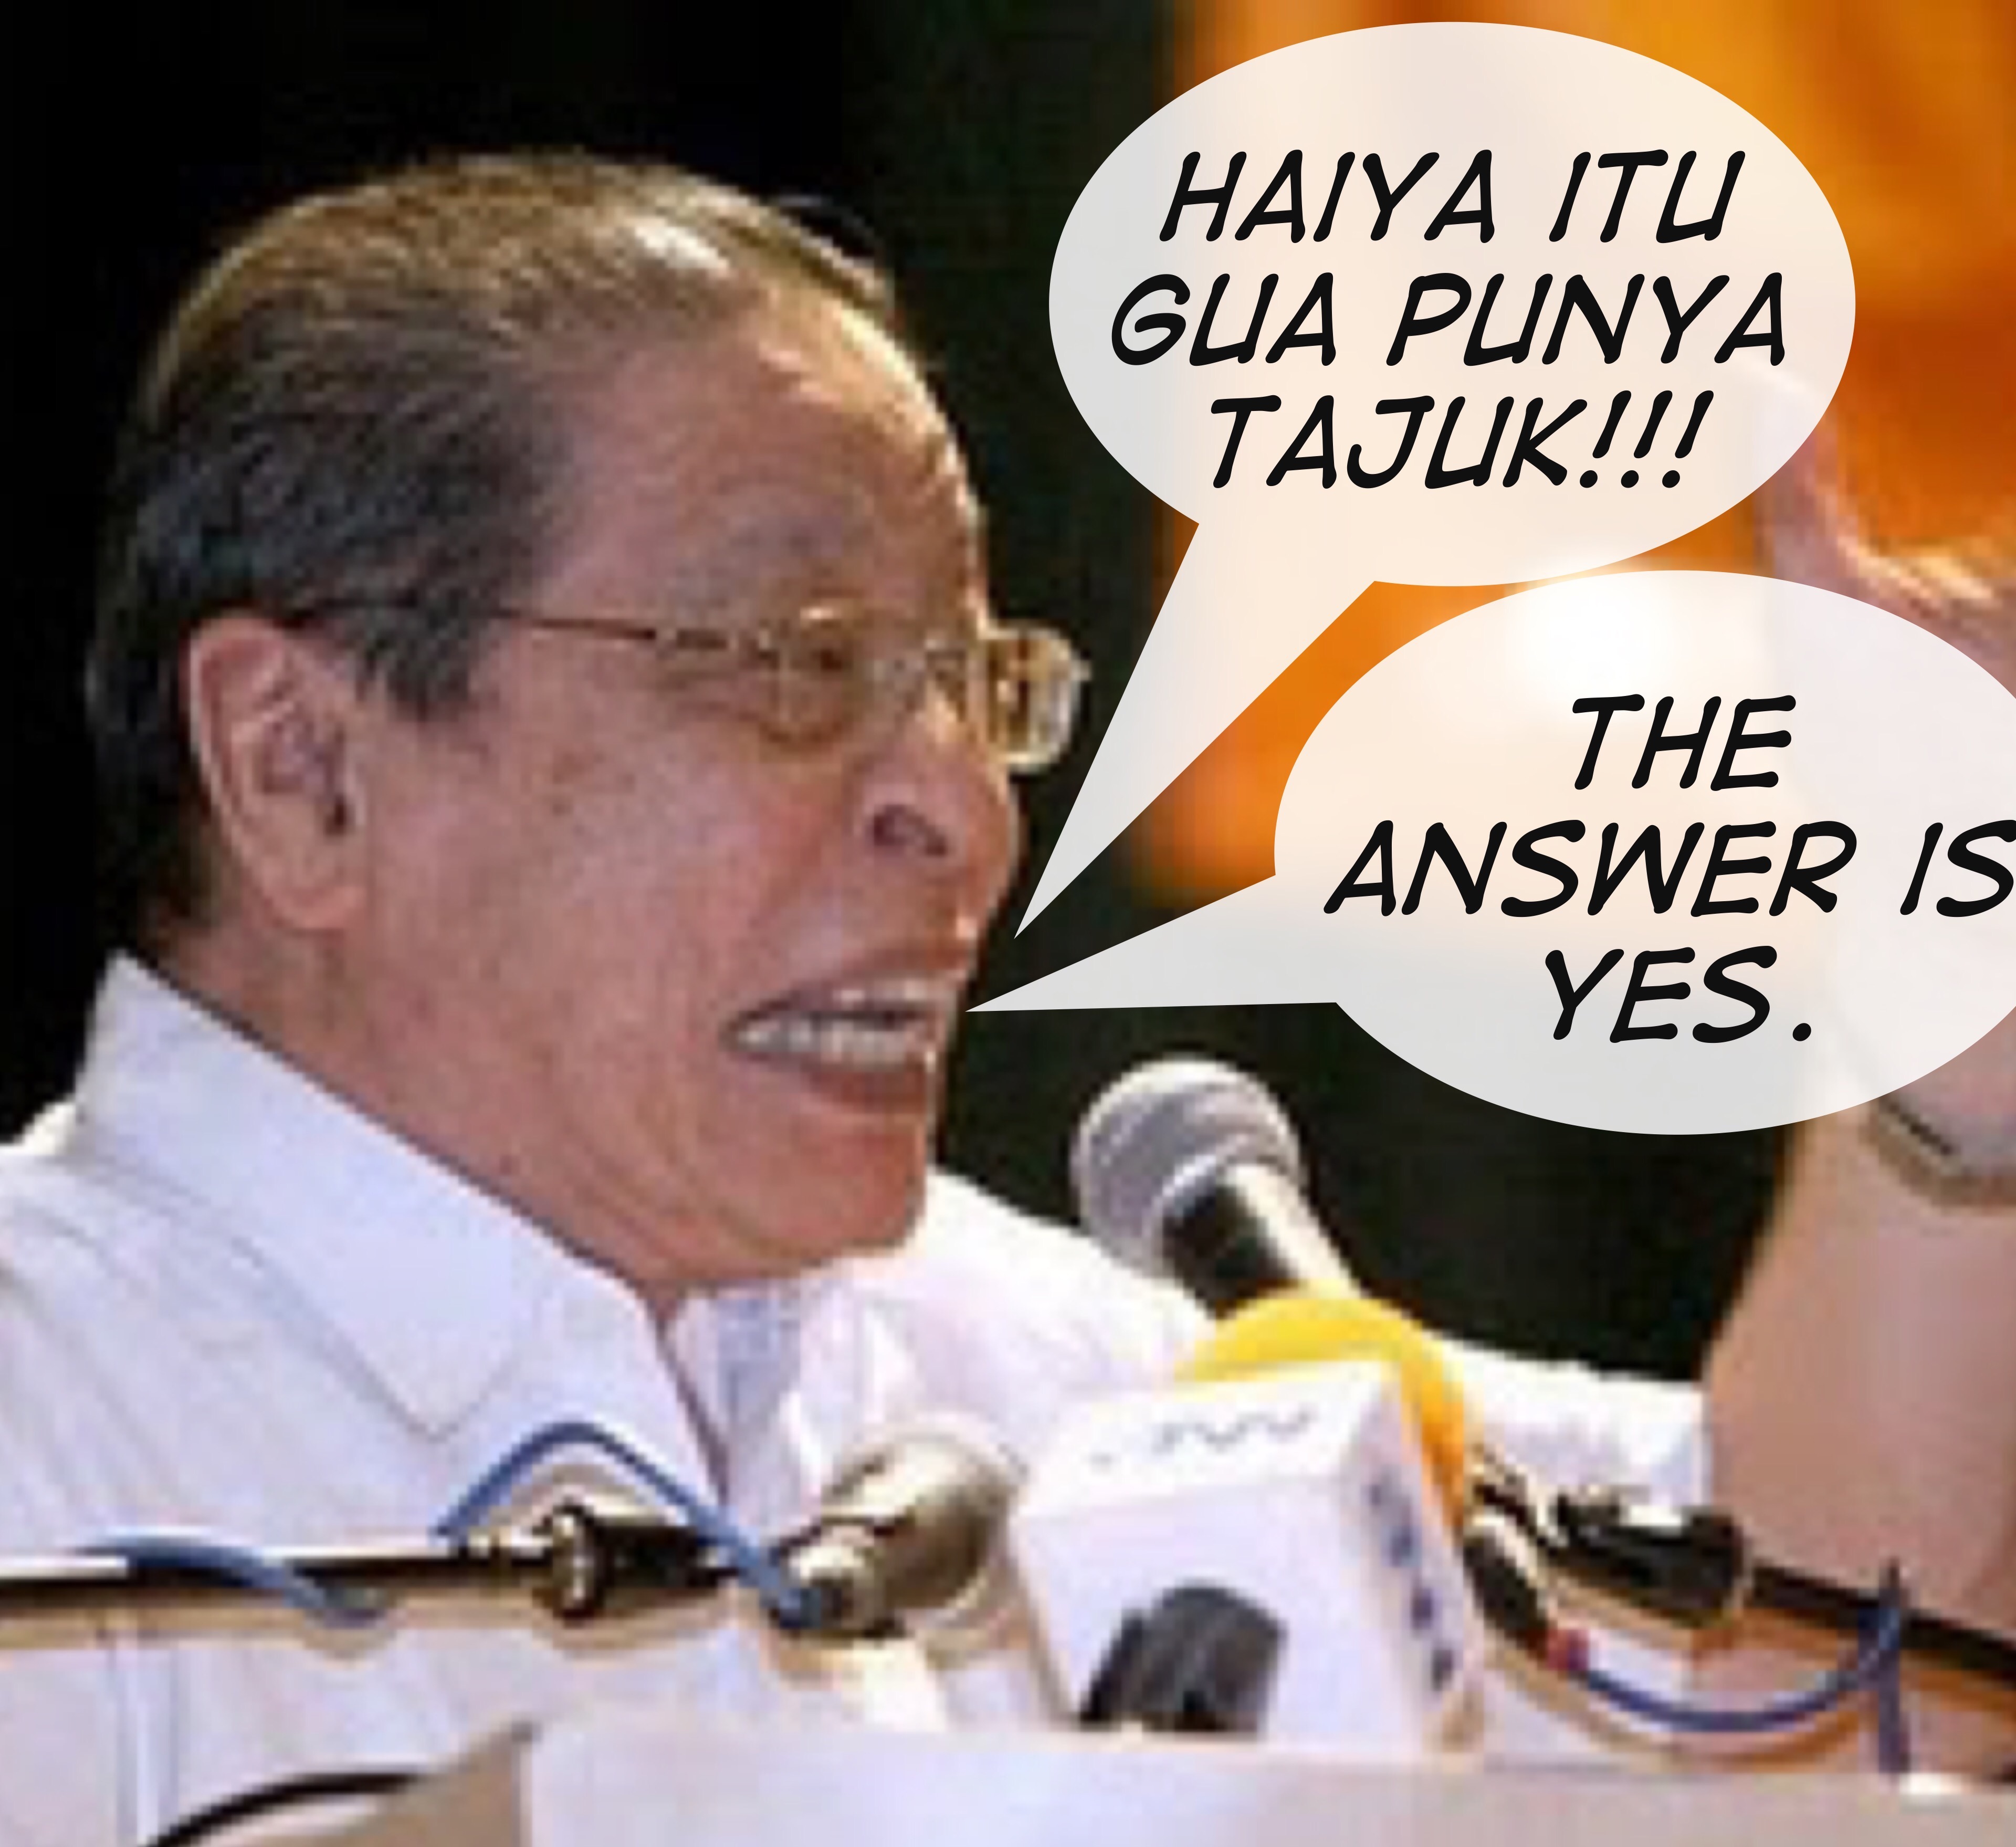 Forex scandal malaysia